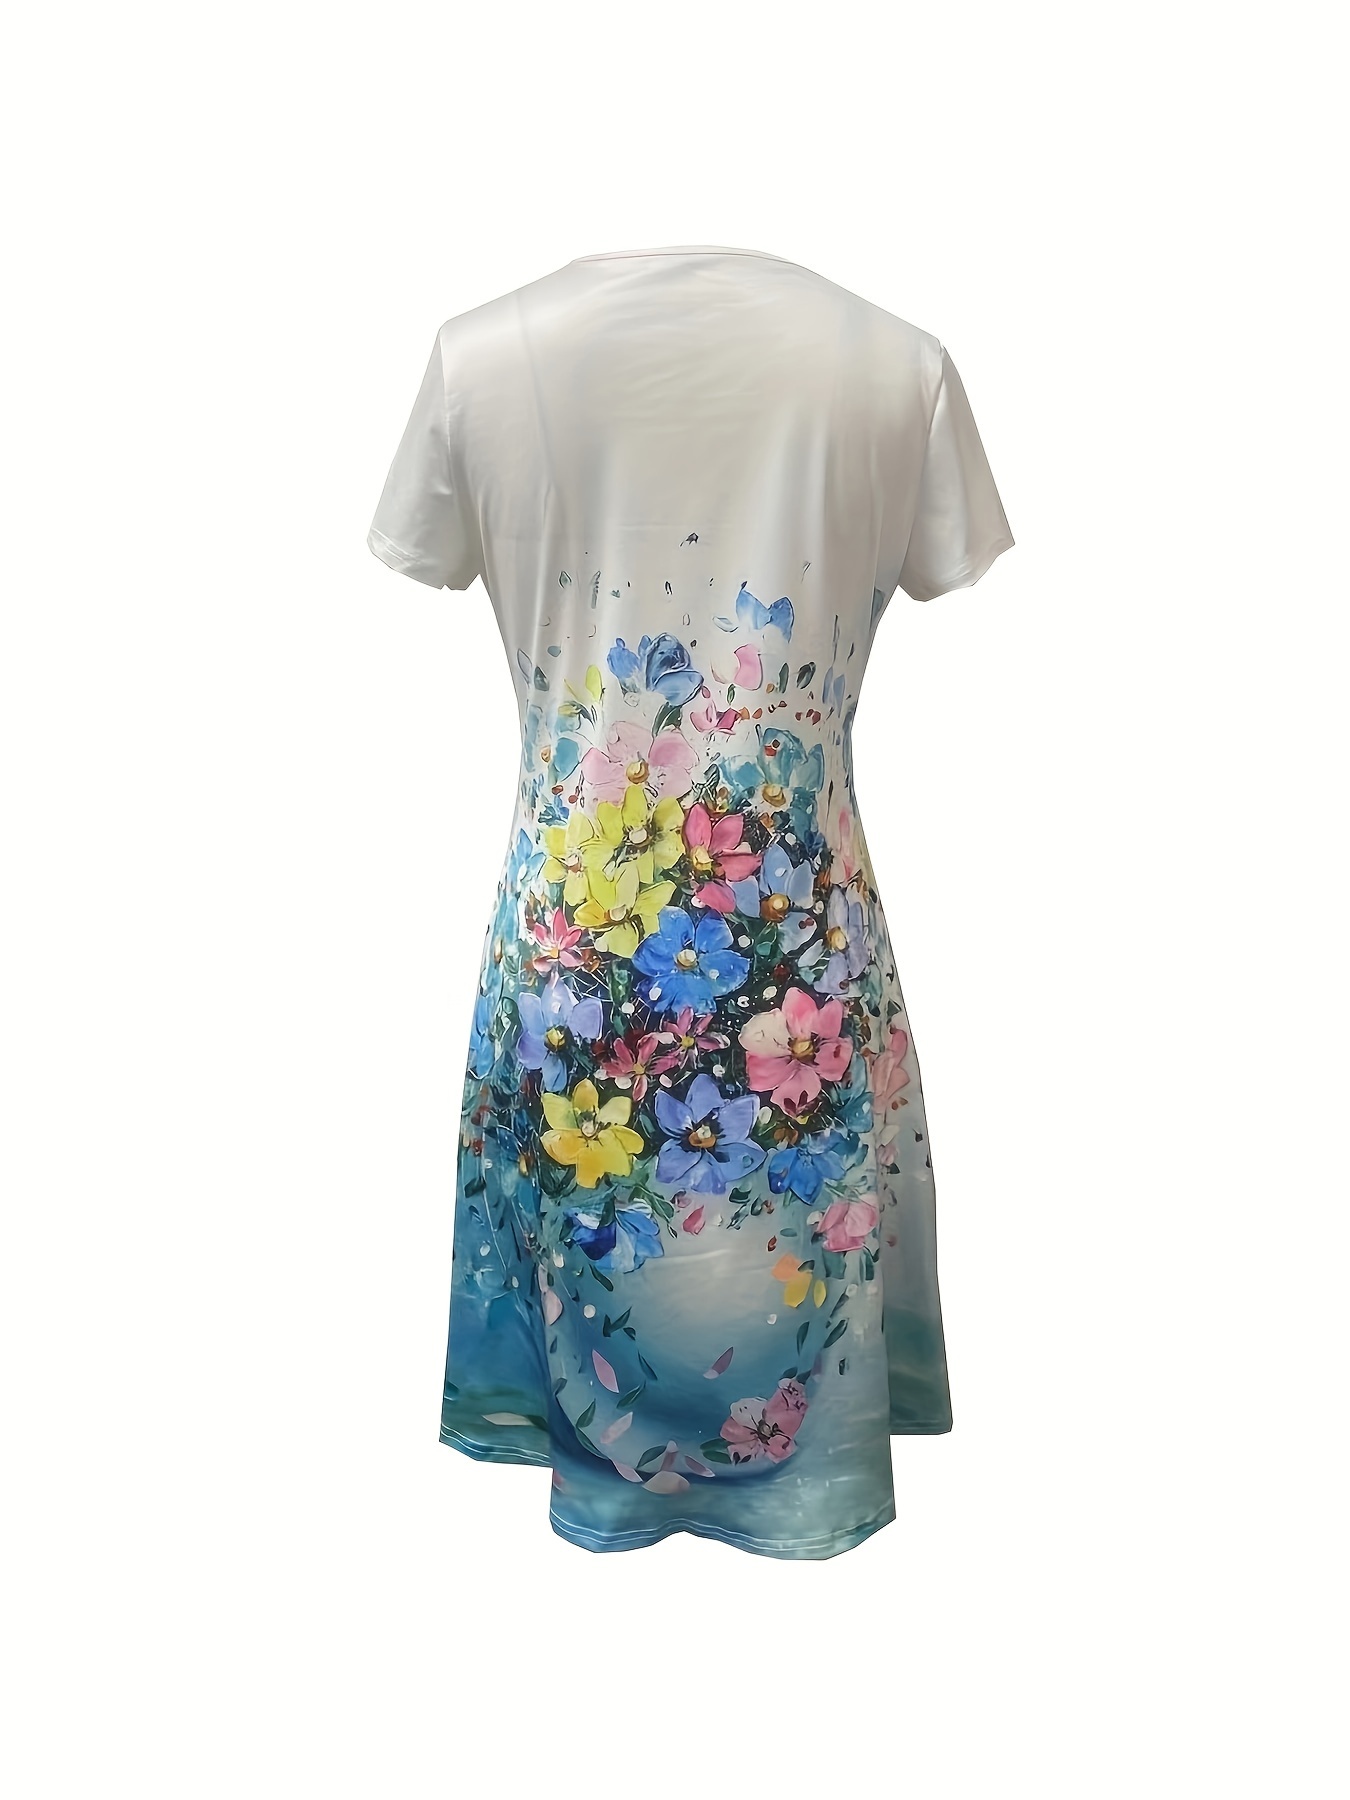 floral print v neck dress casual short sleeve dress for spring summer womens clothing